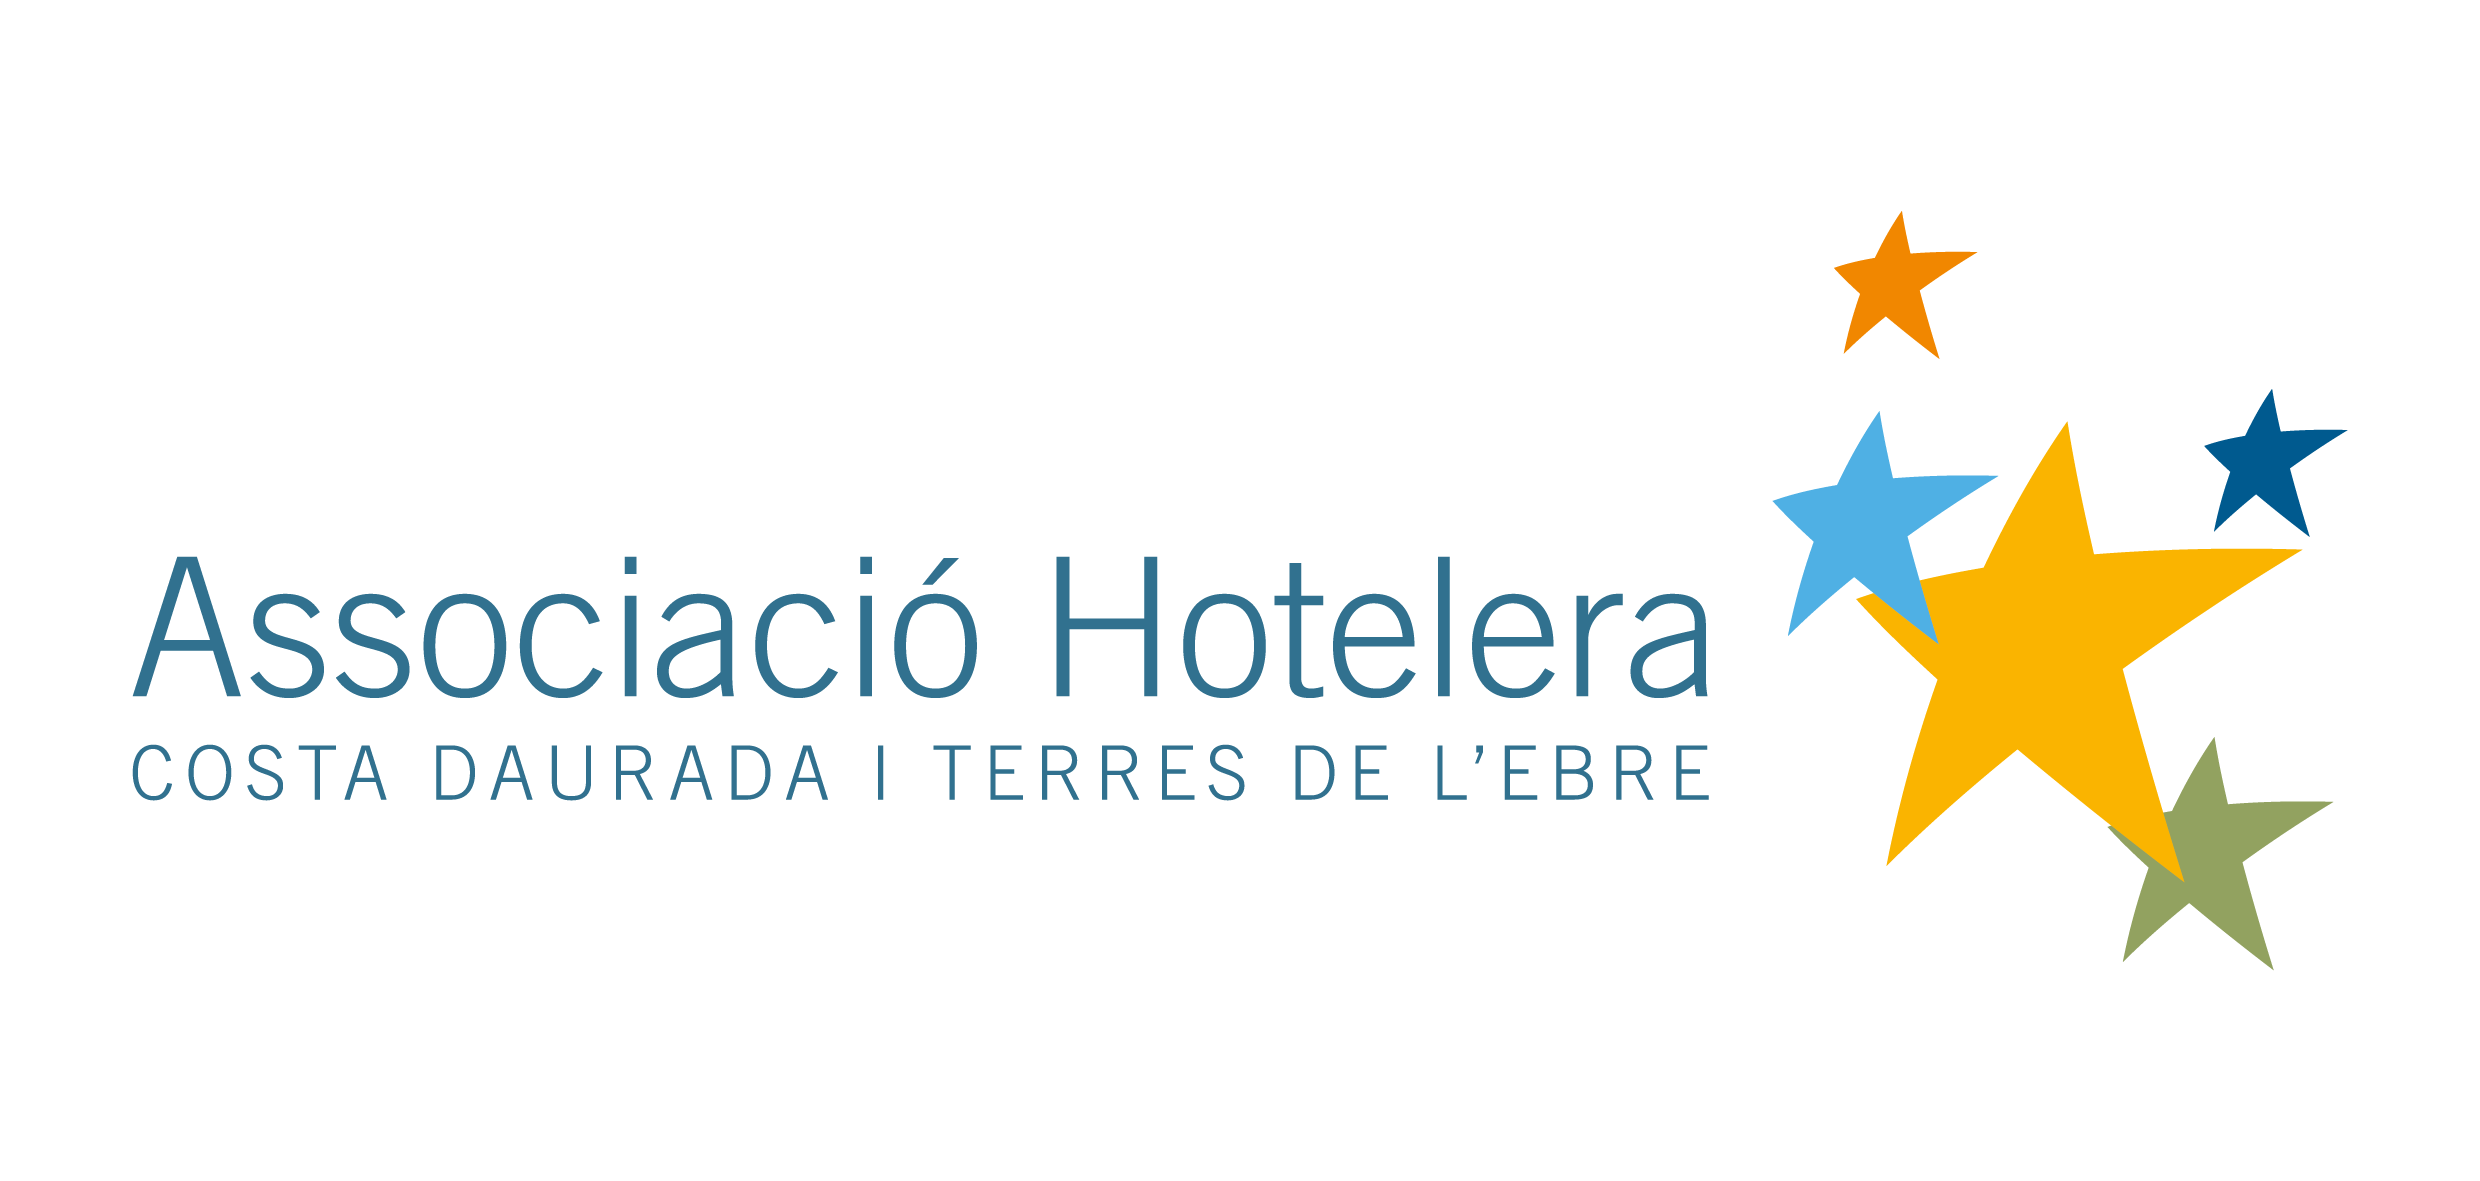 ASSOCIACIÓ HOTELERA COSTA DAURADA